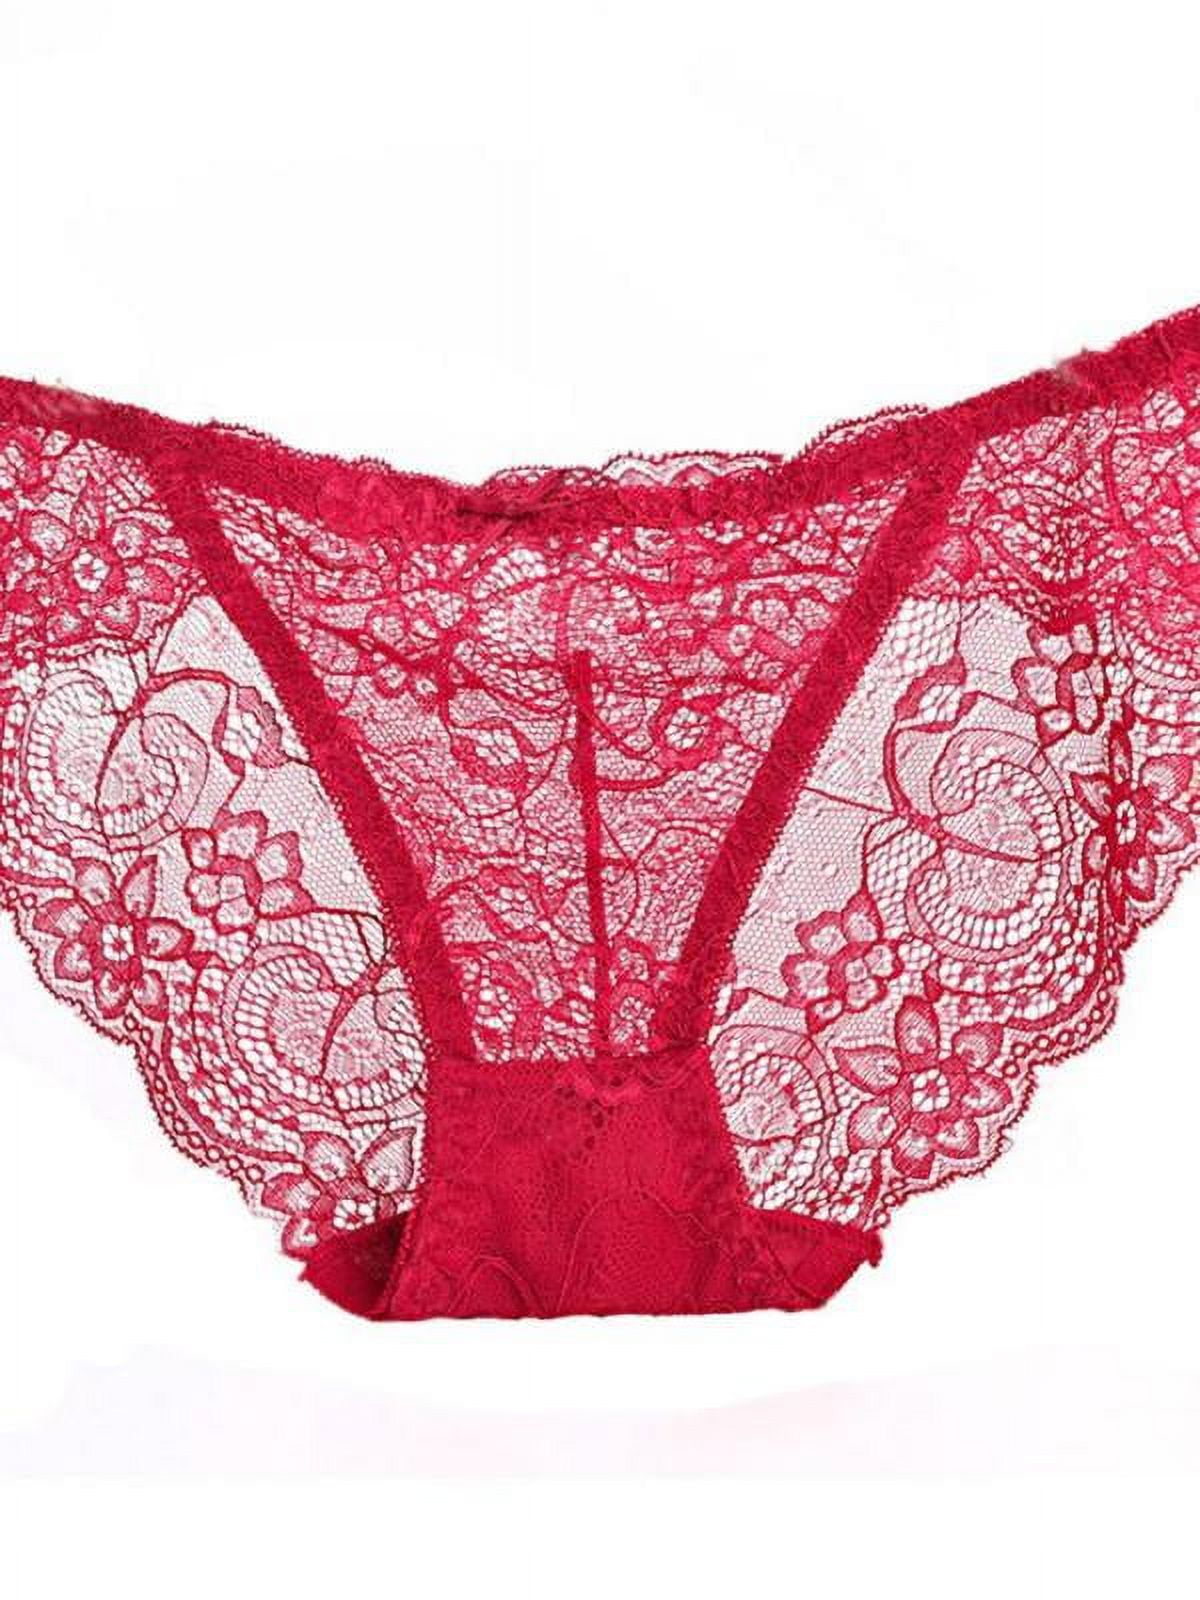 Panties Women's Lace Sexy Thong Underwear, Fashion Transparent